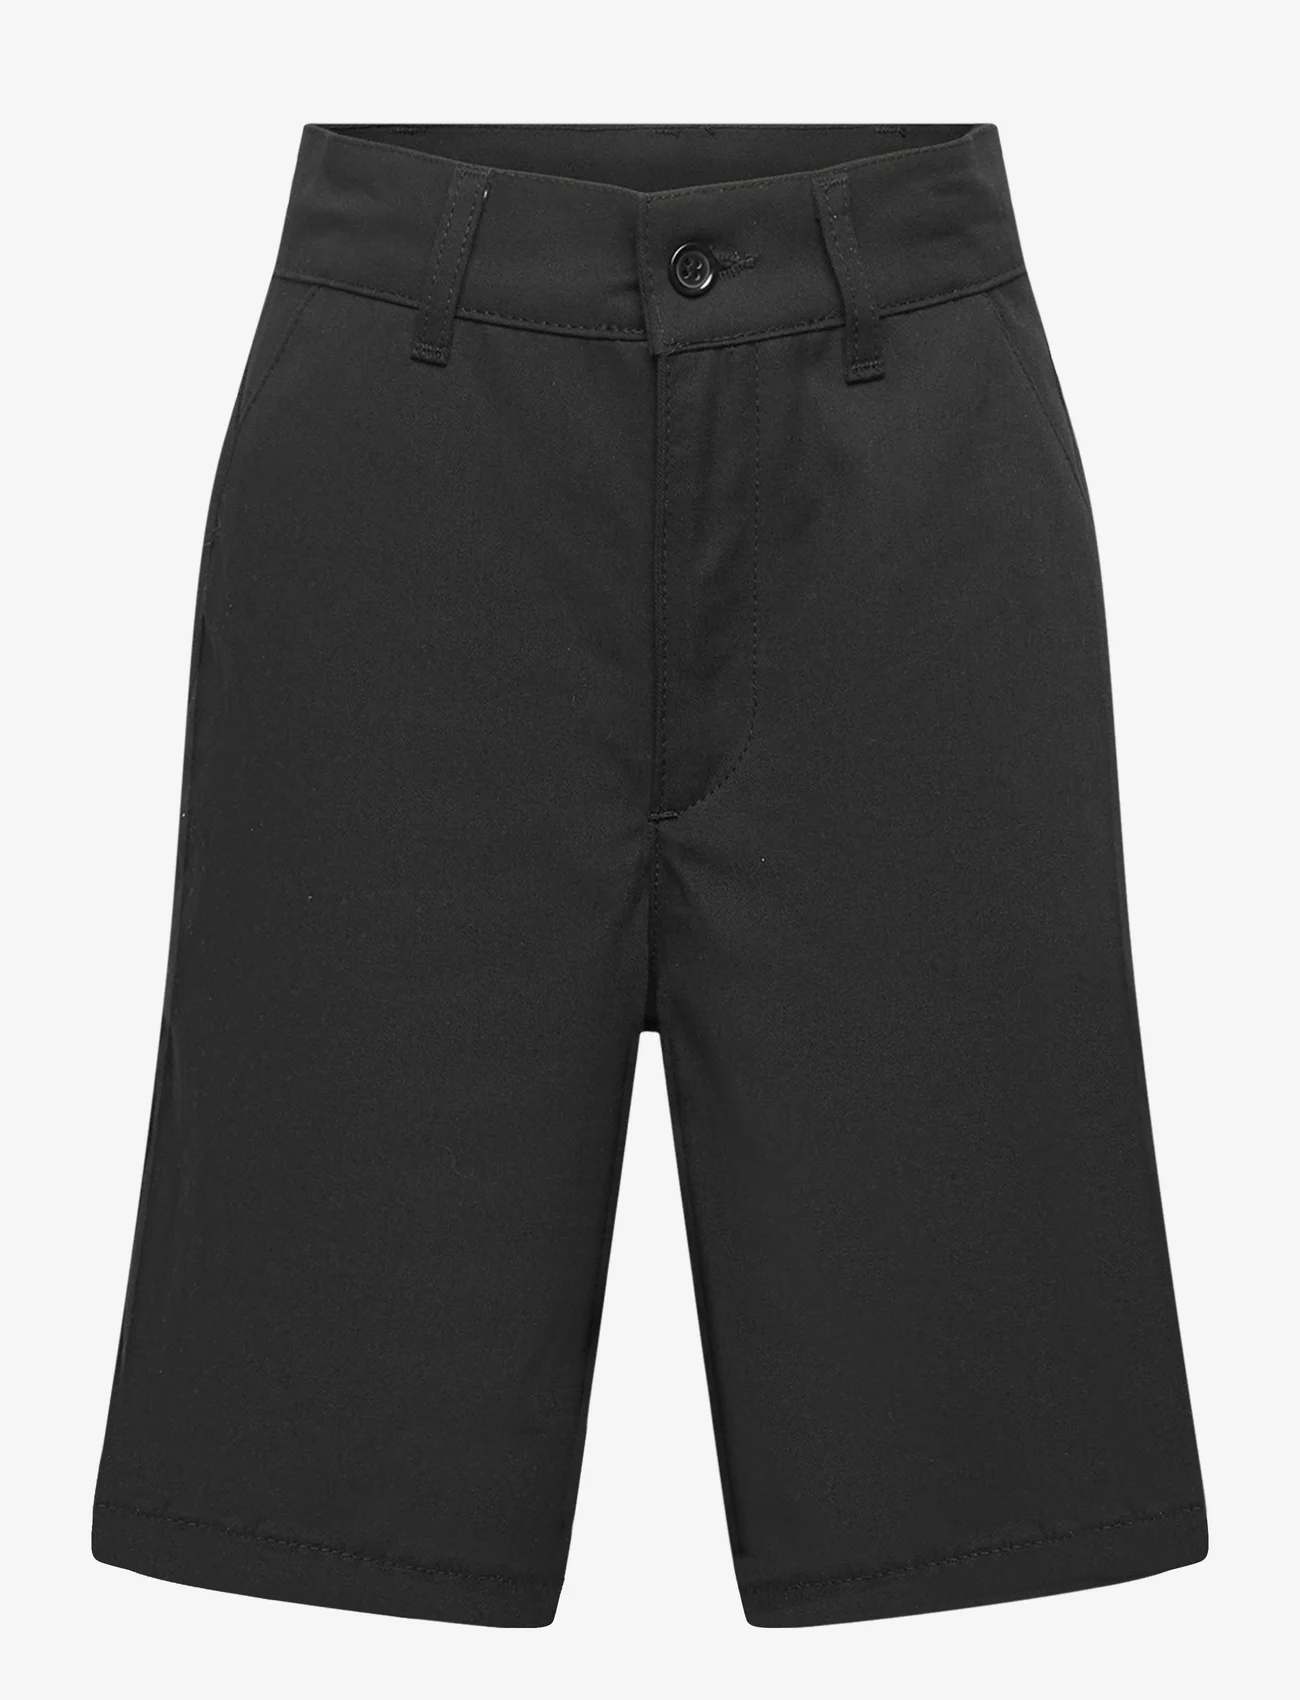 Grunt - Jackie Original Shorts - chino-shorts - black - 0